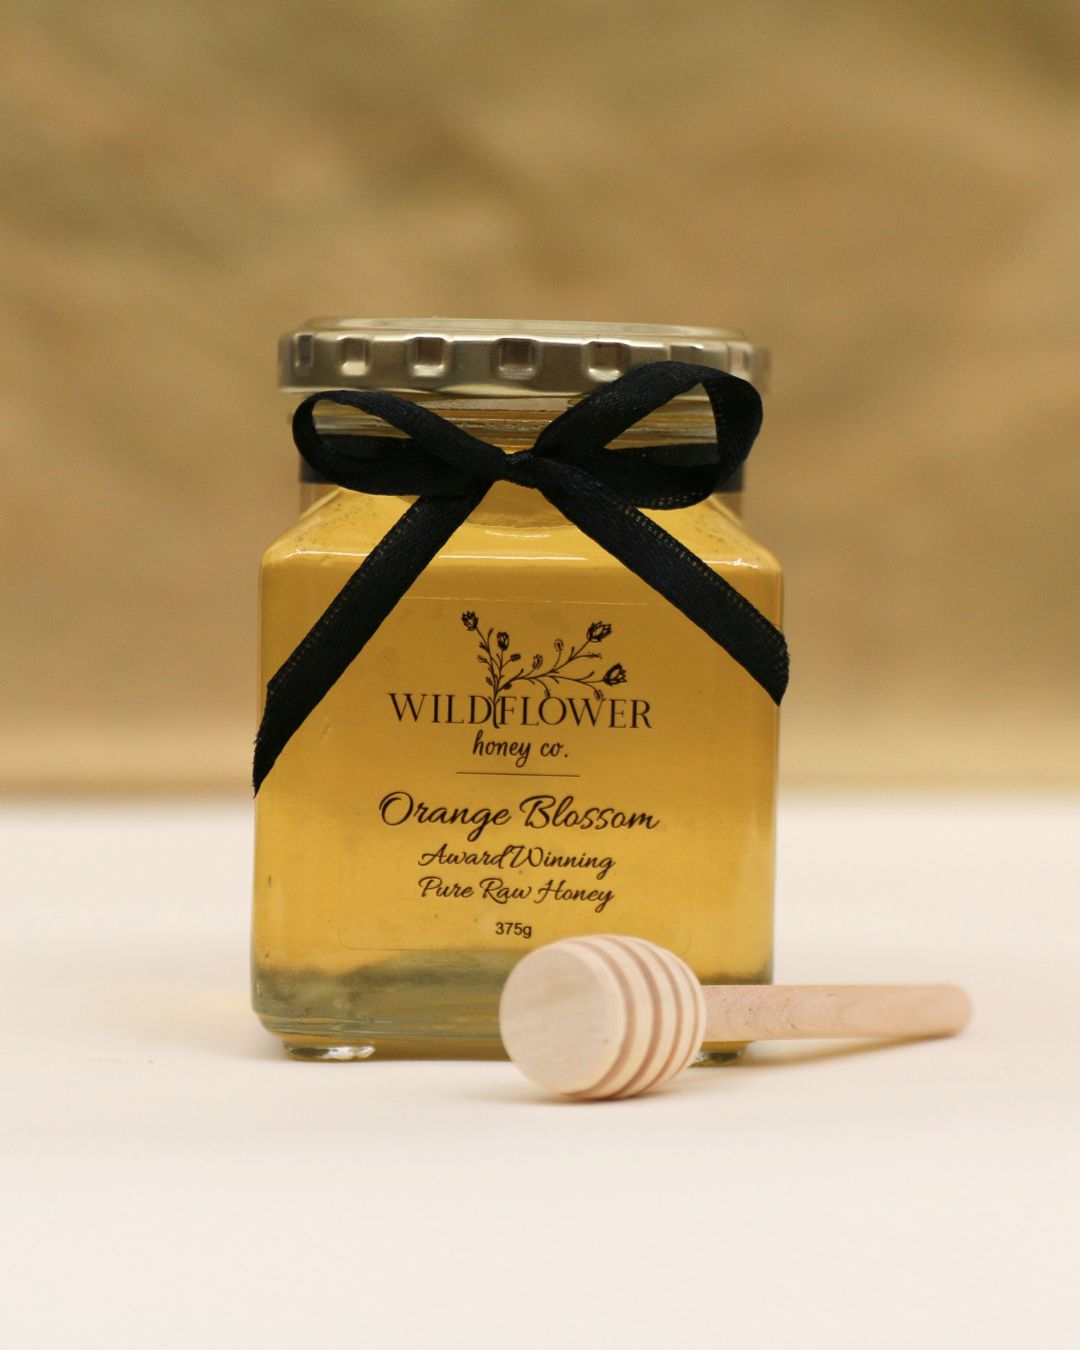 Spiced Orange Rooibos and Honey Gift Box • Sunbird x Wildflower